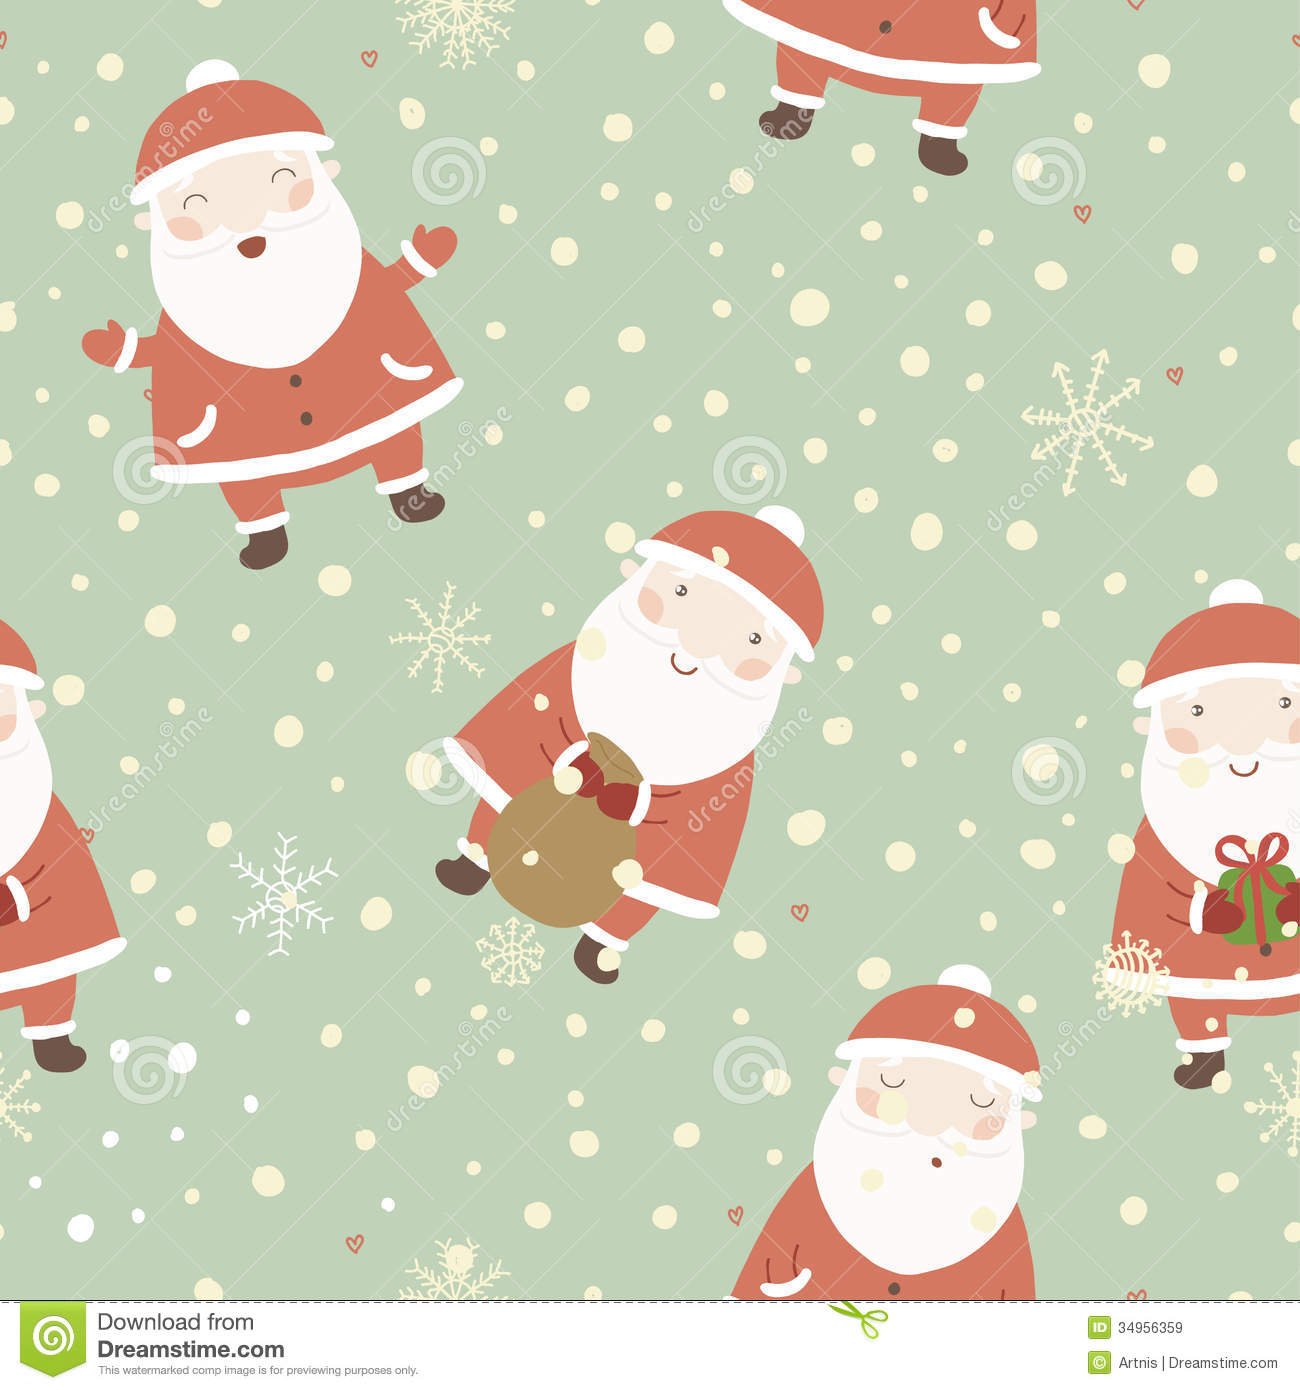 Cute Cartoon Christmas Wallpaper 10560 Hd Wallpapers 1300x1390